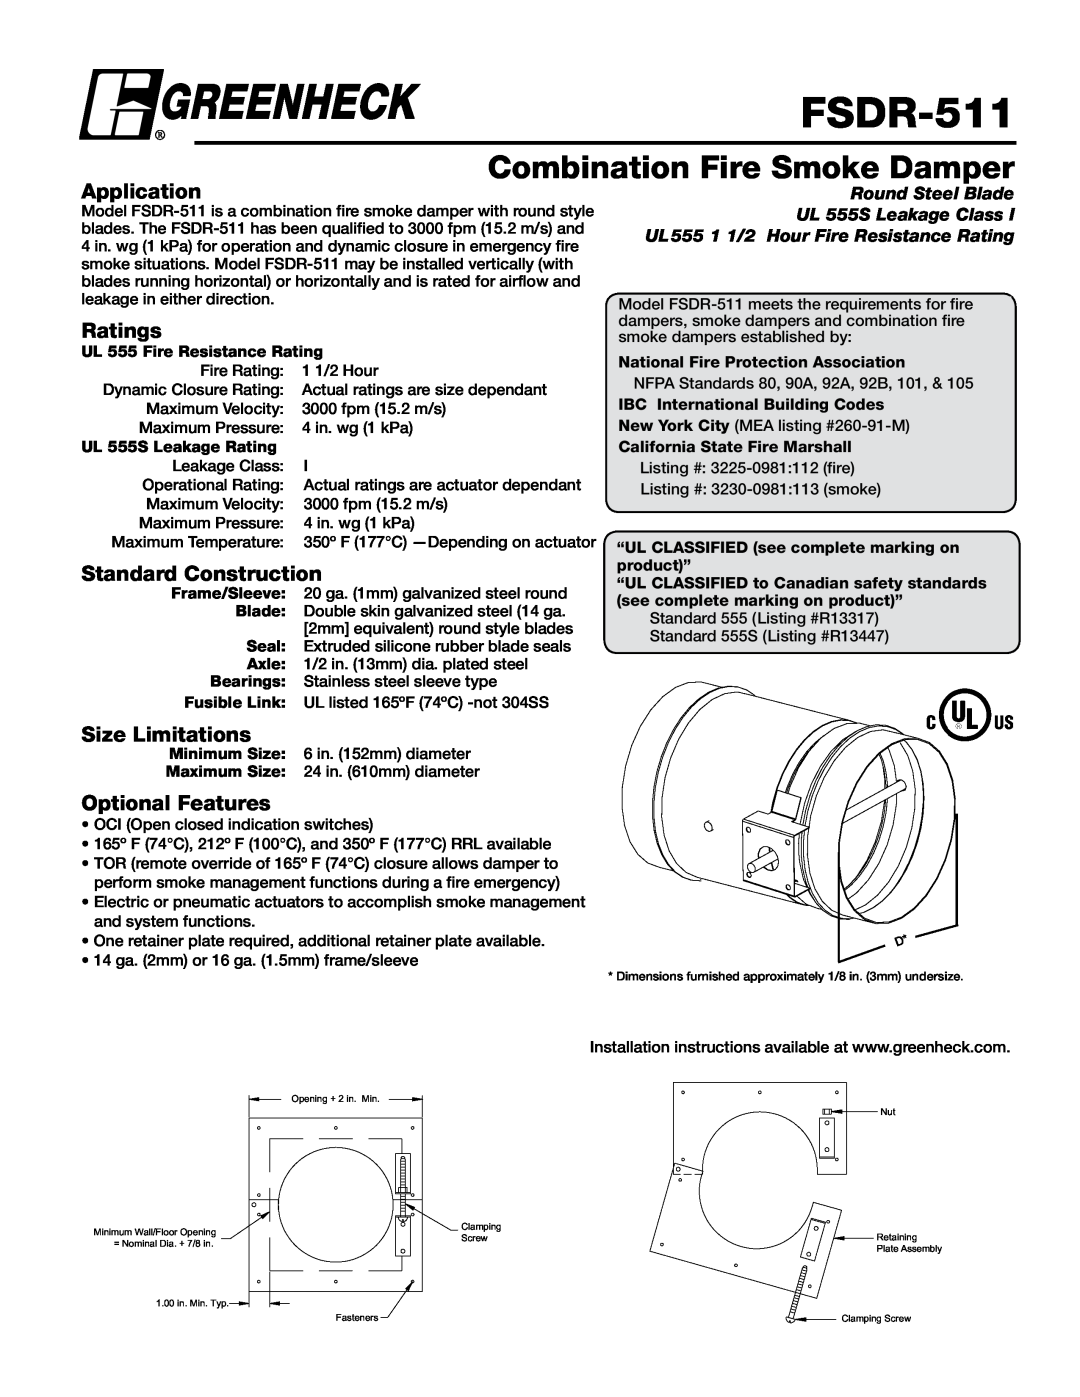 Greenheck Fan FSDR-511 dimensions Combination Fire Smoke Damper, Application, Ratings, Standard Construction 